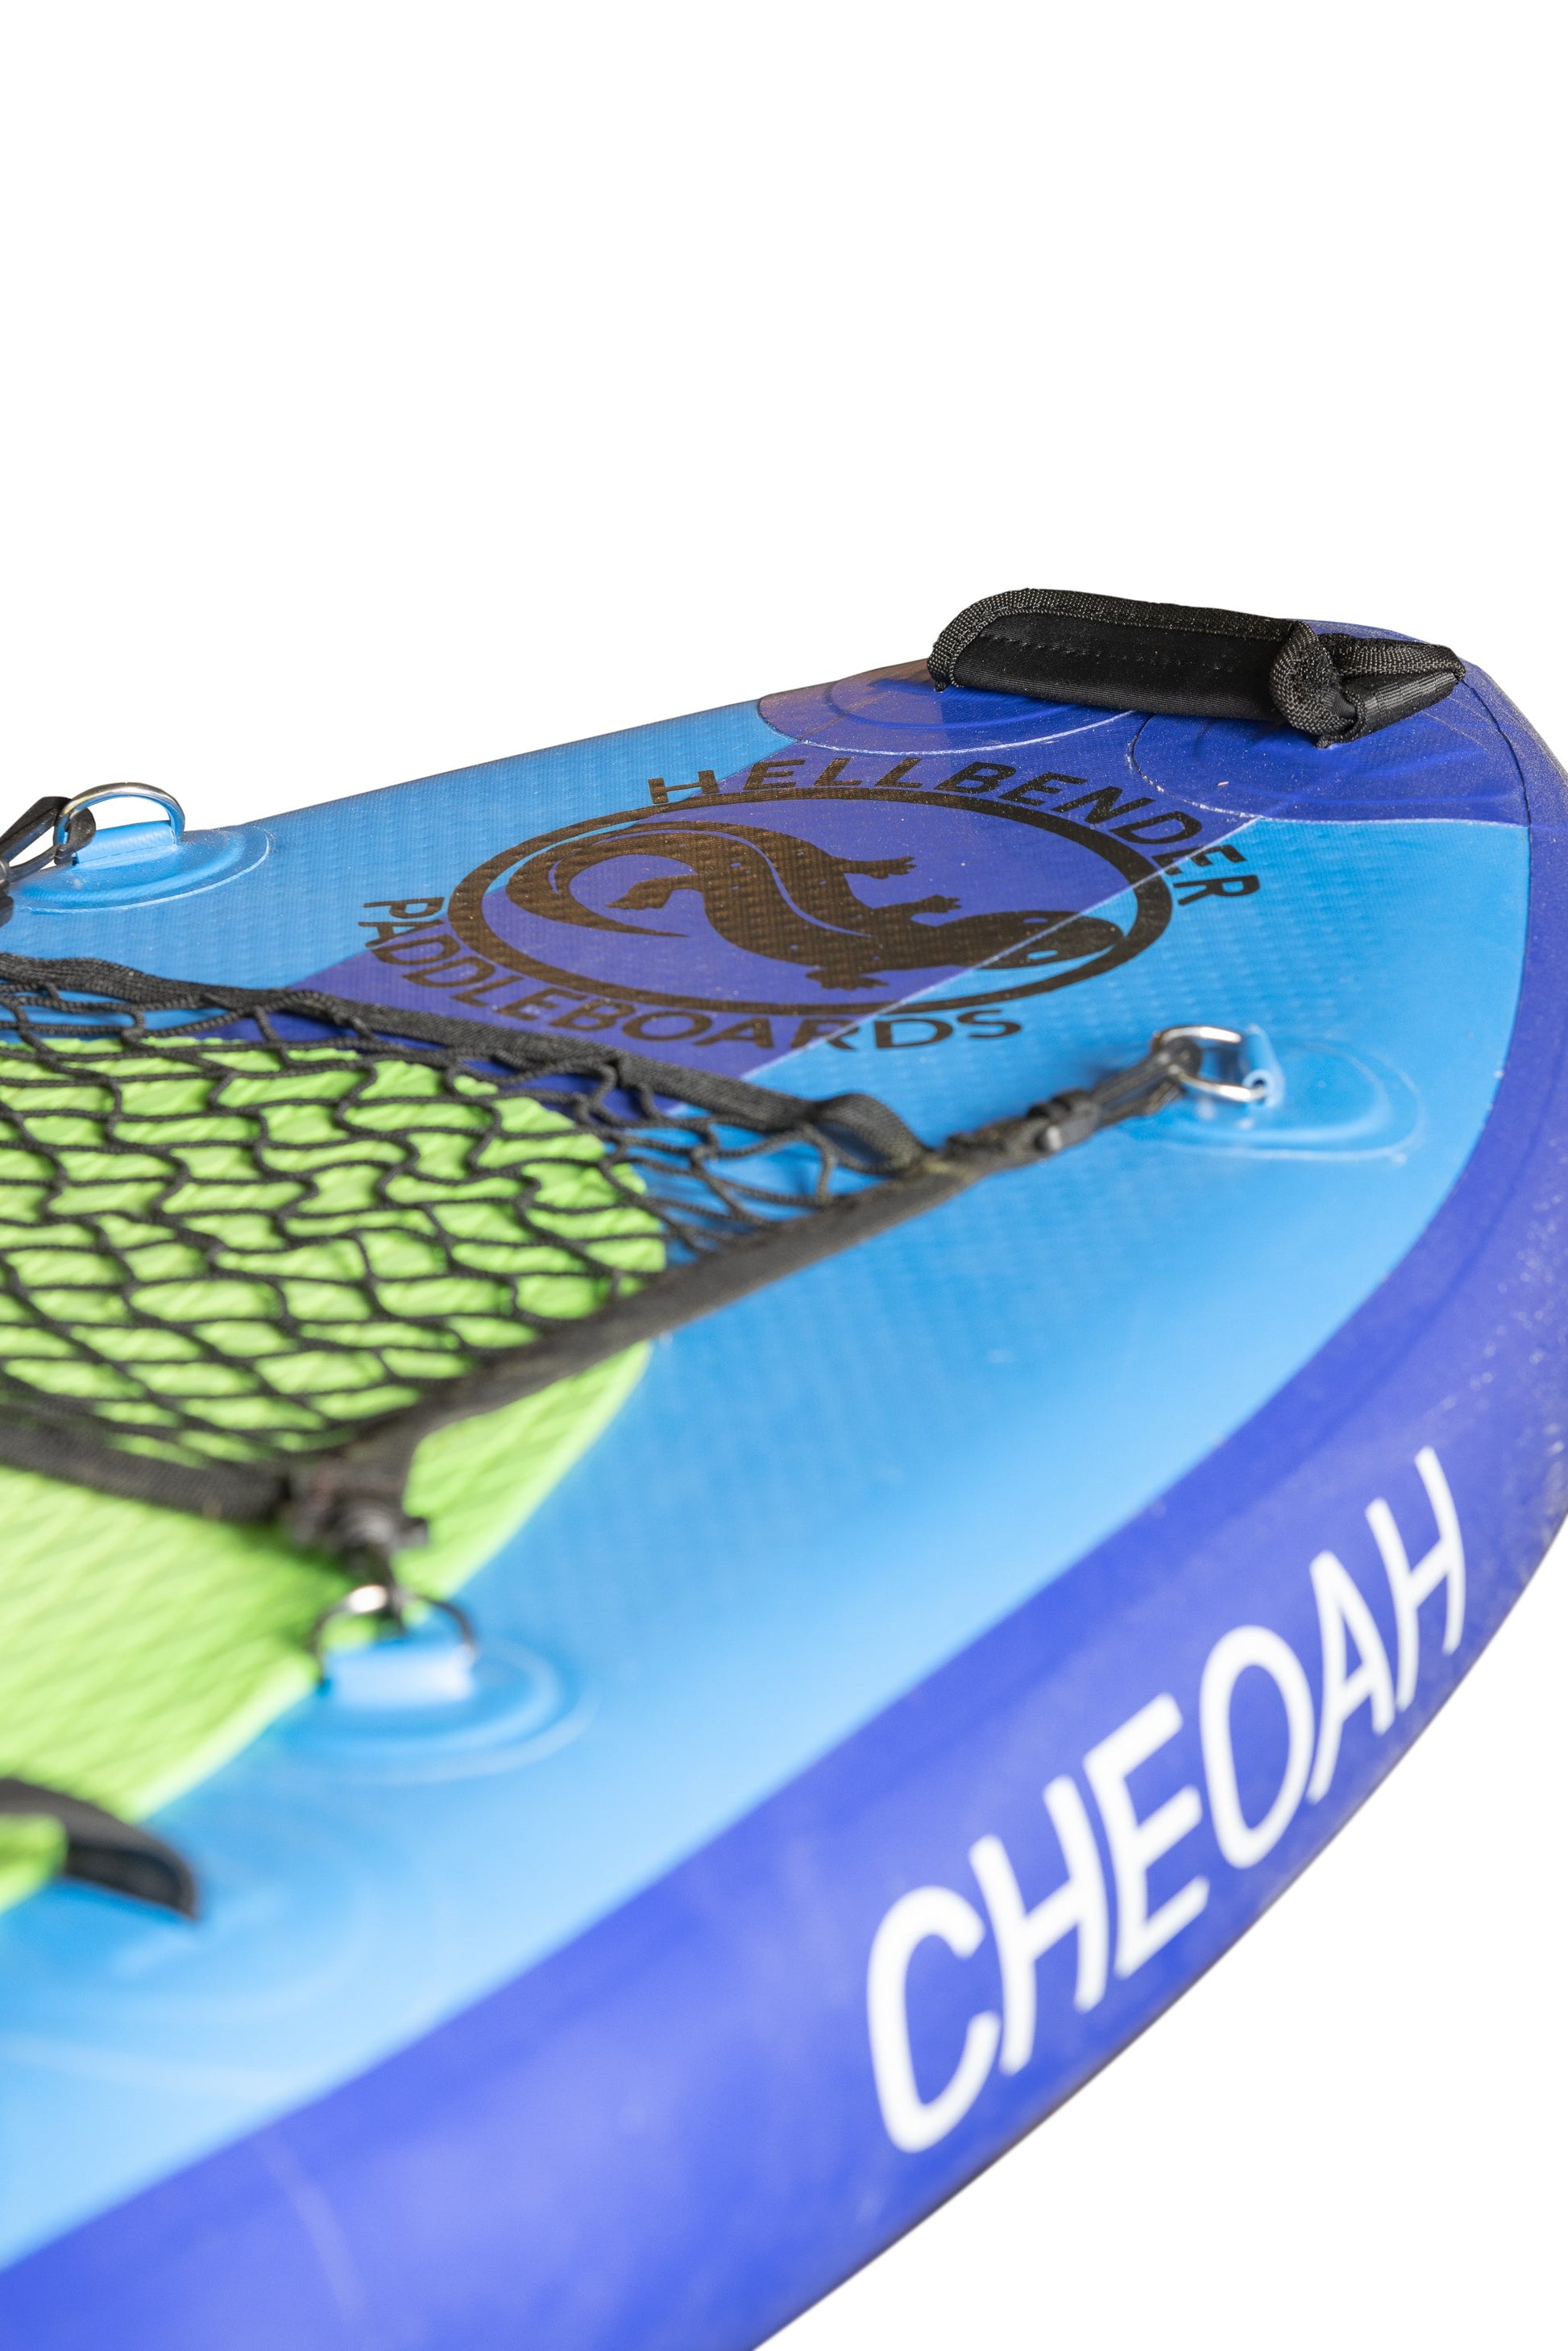 Cheoah - Hellbender Paddleboards